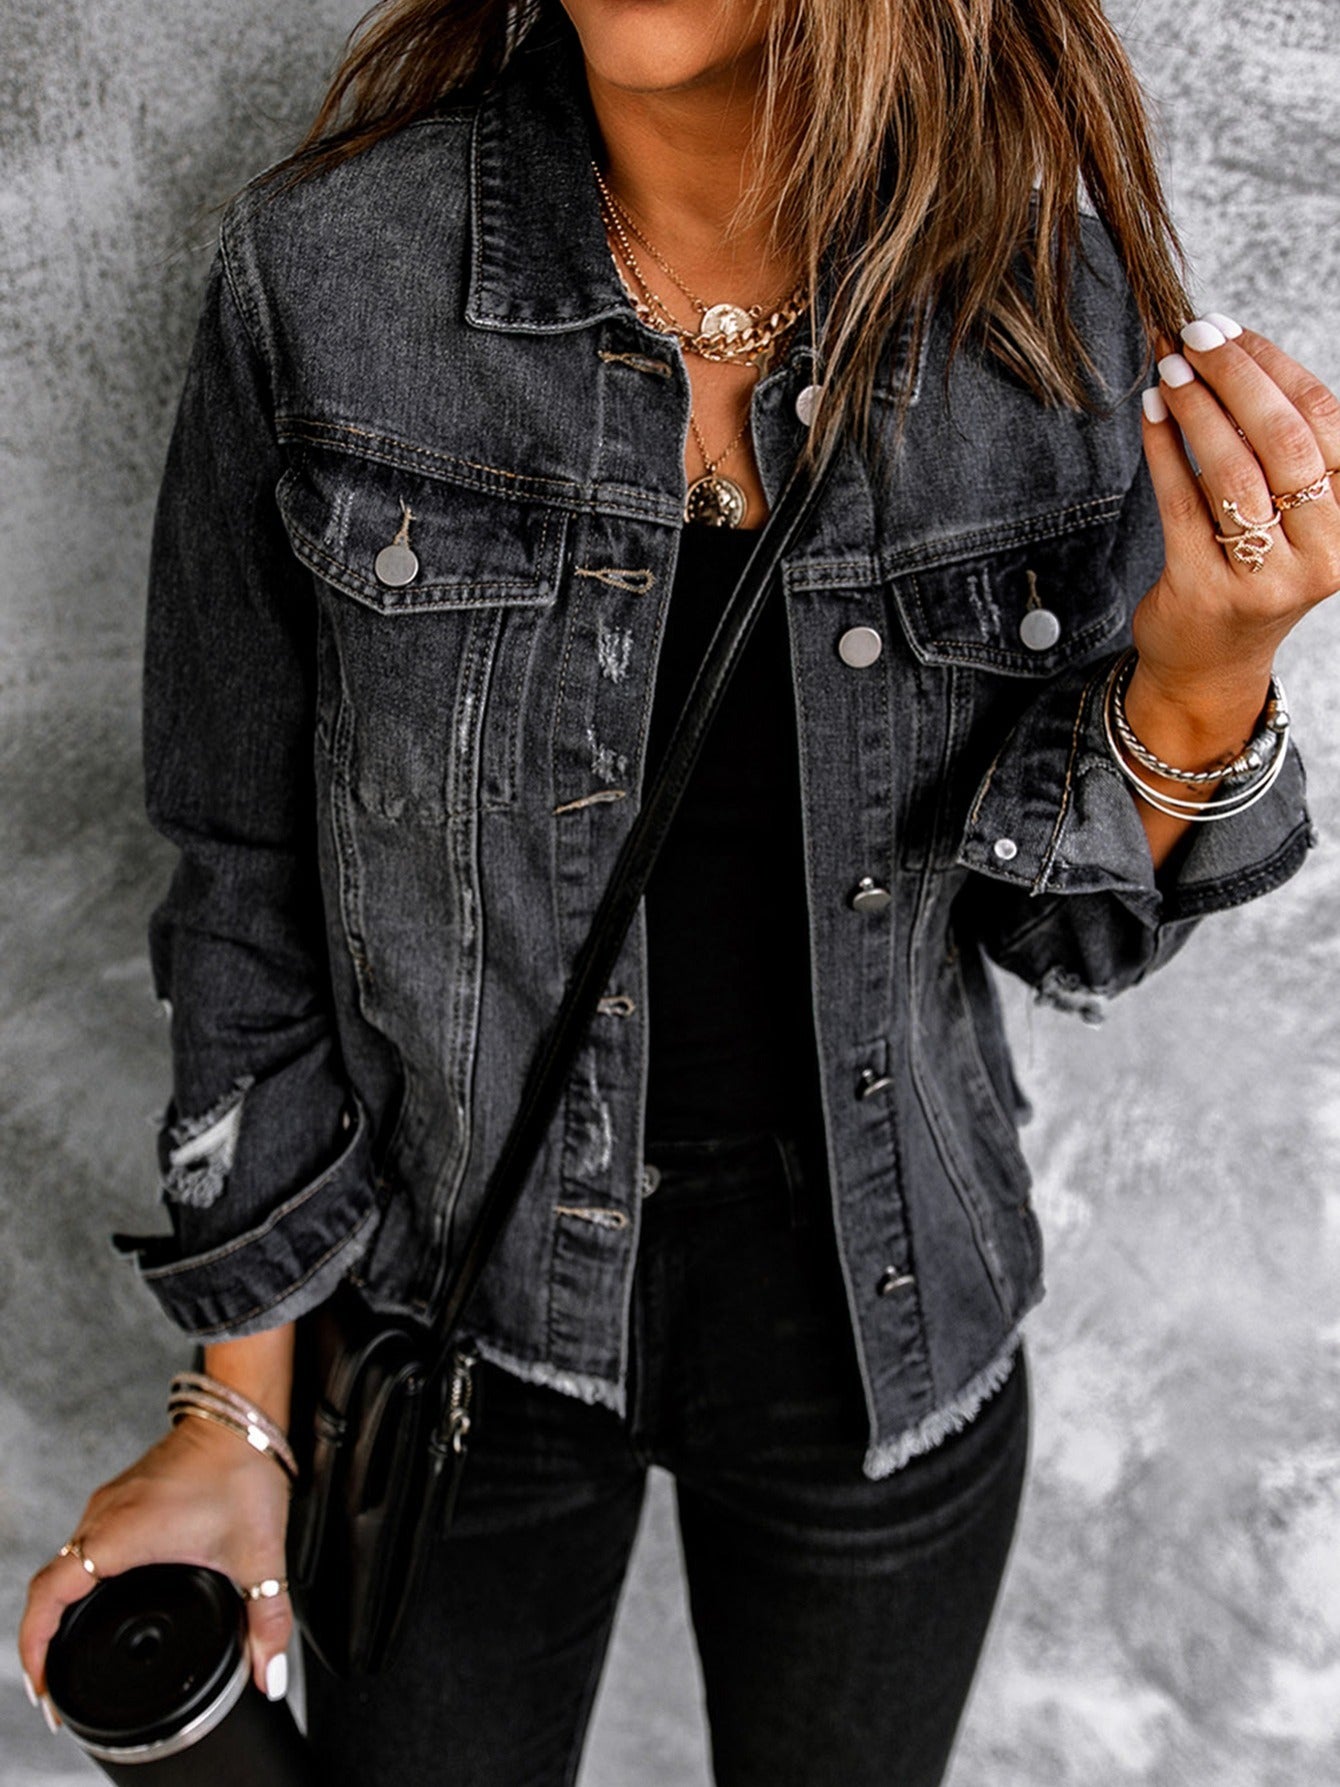 Lovevop-Black Lapel Distressed Denim Coats, Raw Hem Single-Breasted Buttons Long Sleeve Denim Jackets, Women's Denim Clothing